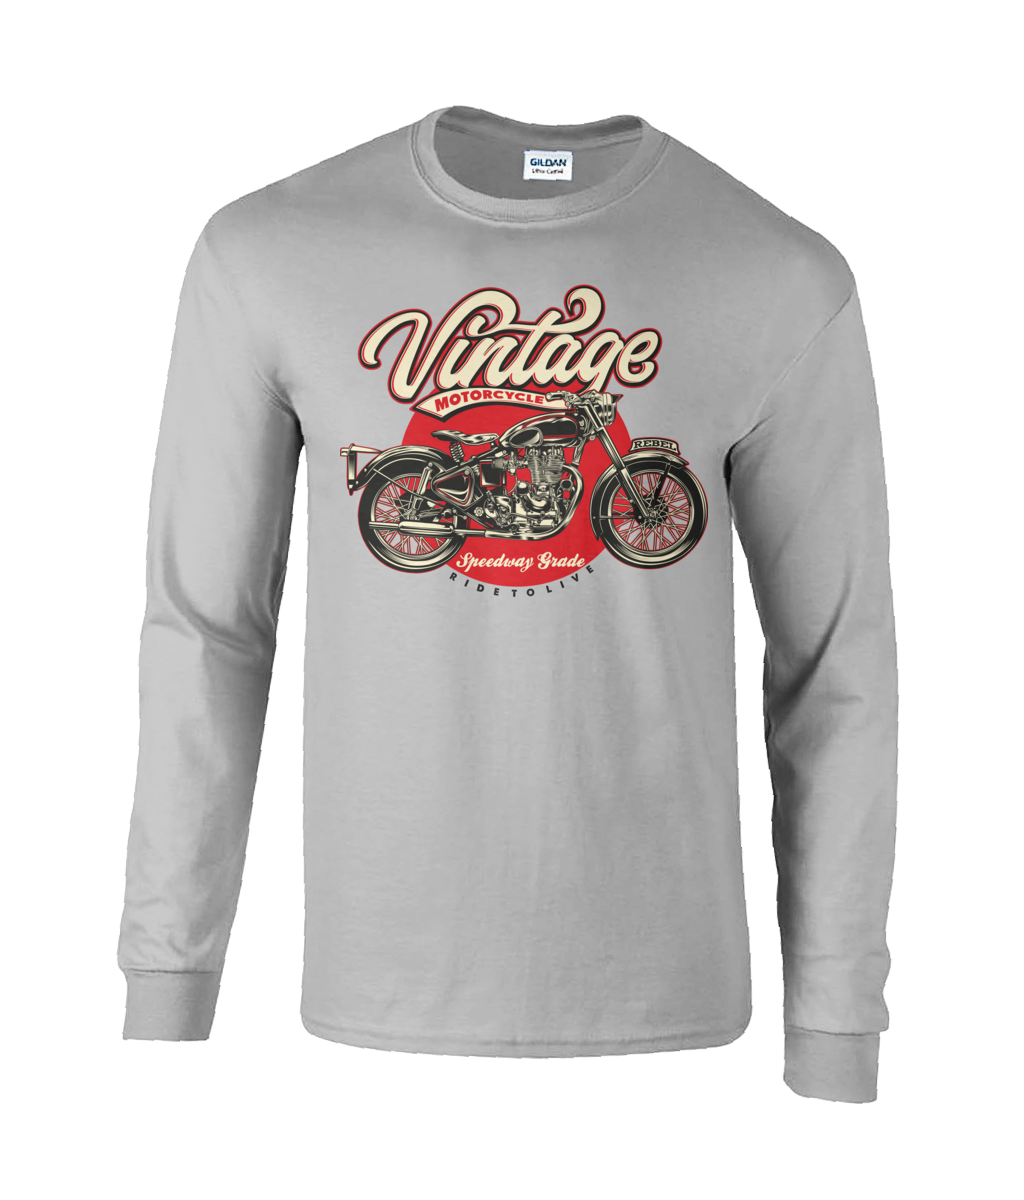 Vintage Motorcycle Ultra Long T-Shirt | T-Shirts UK